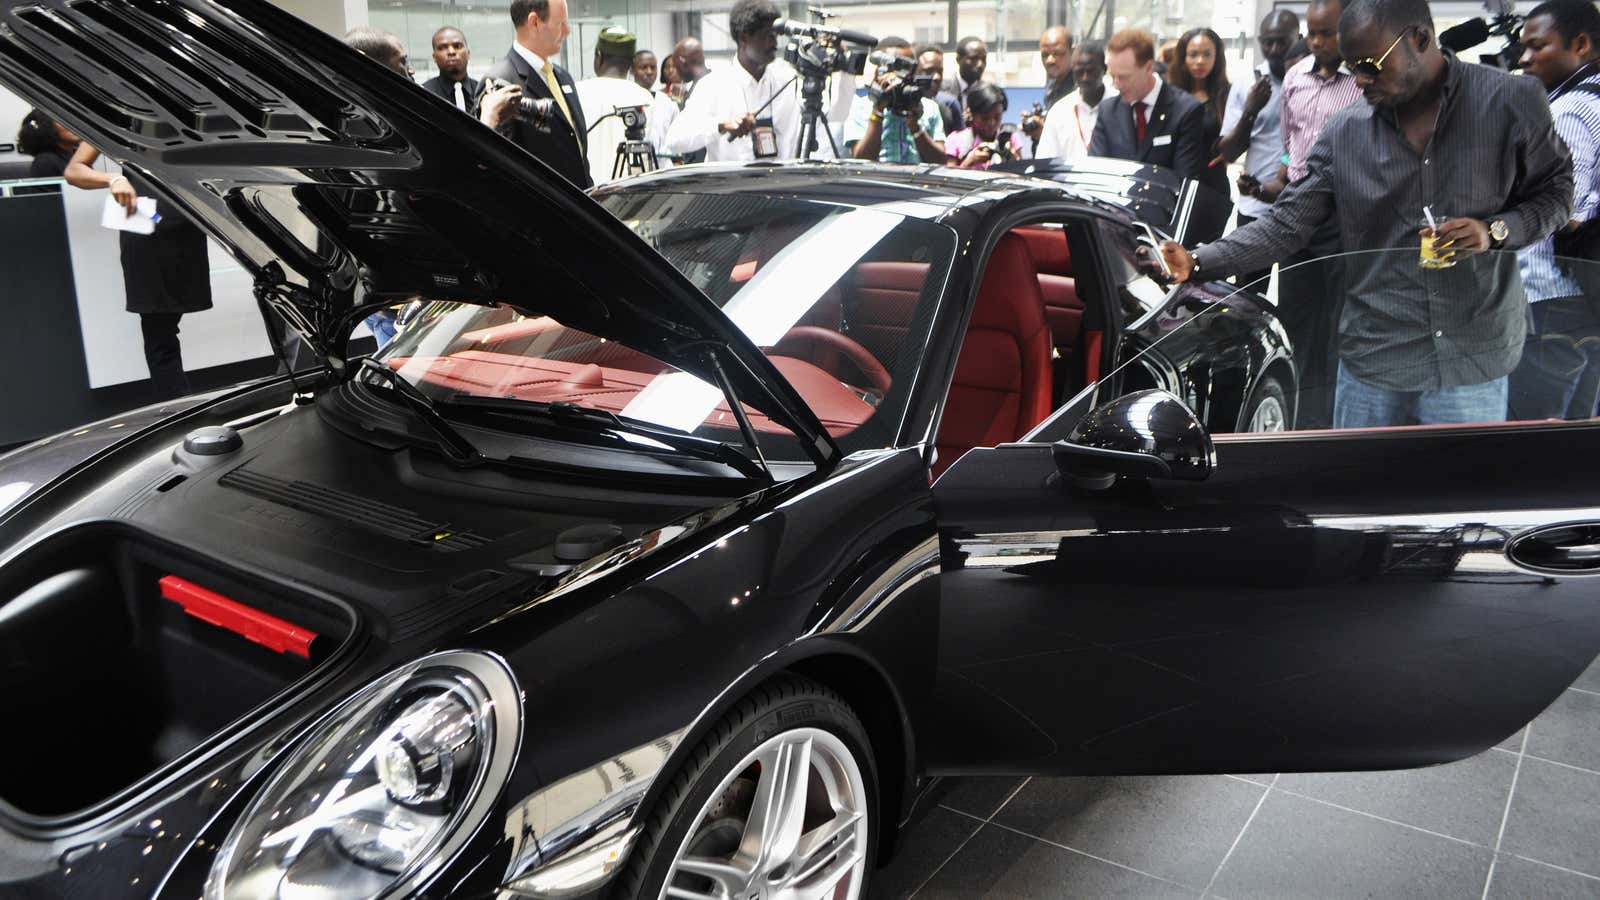 Nigeria should look forward to automobile boom says PwC